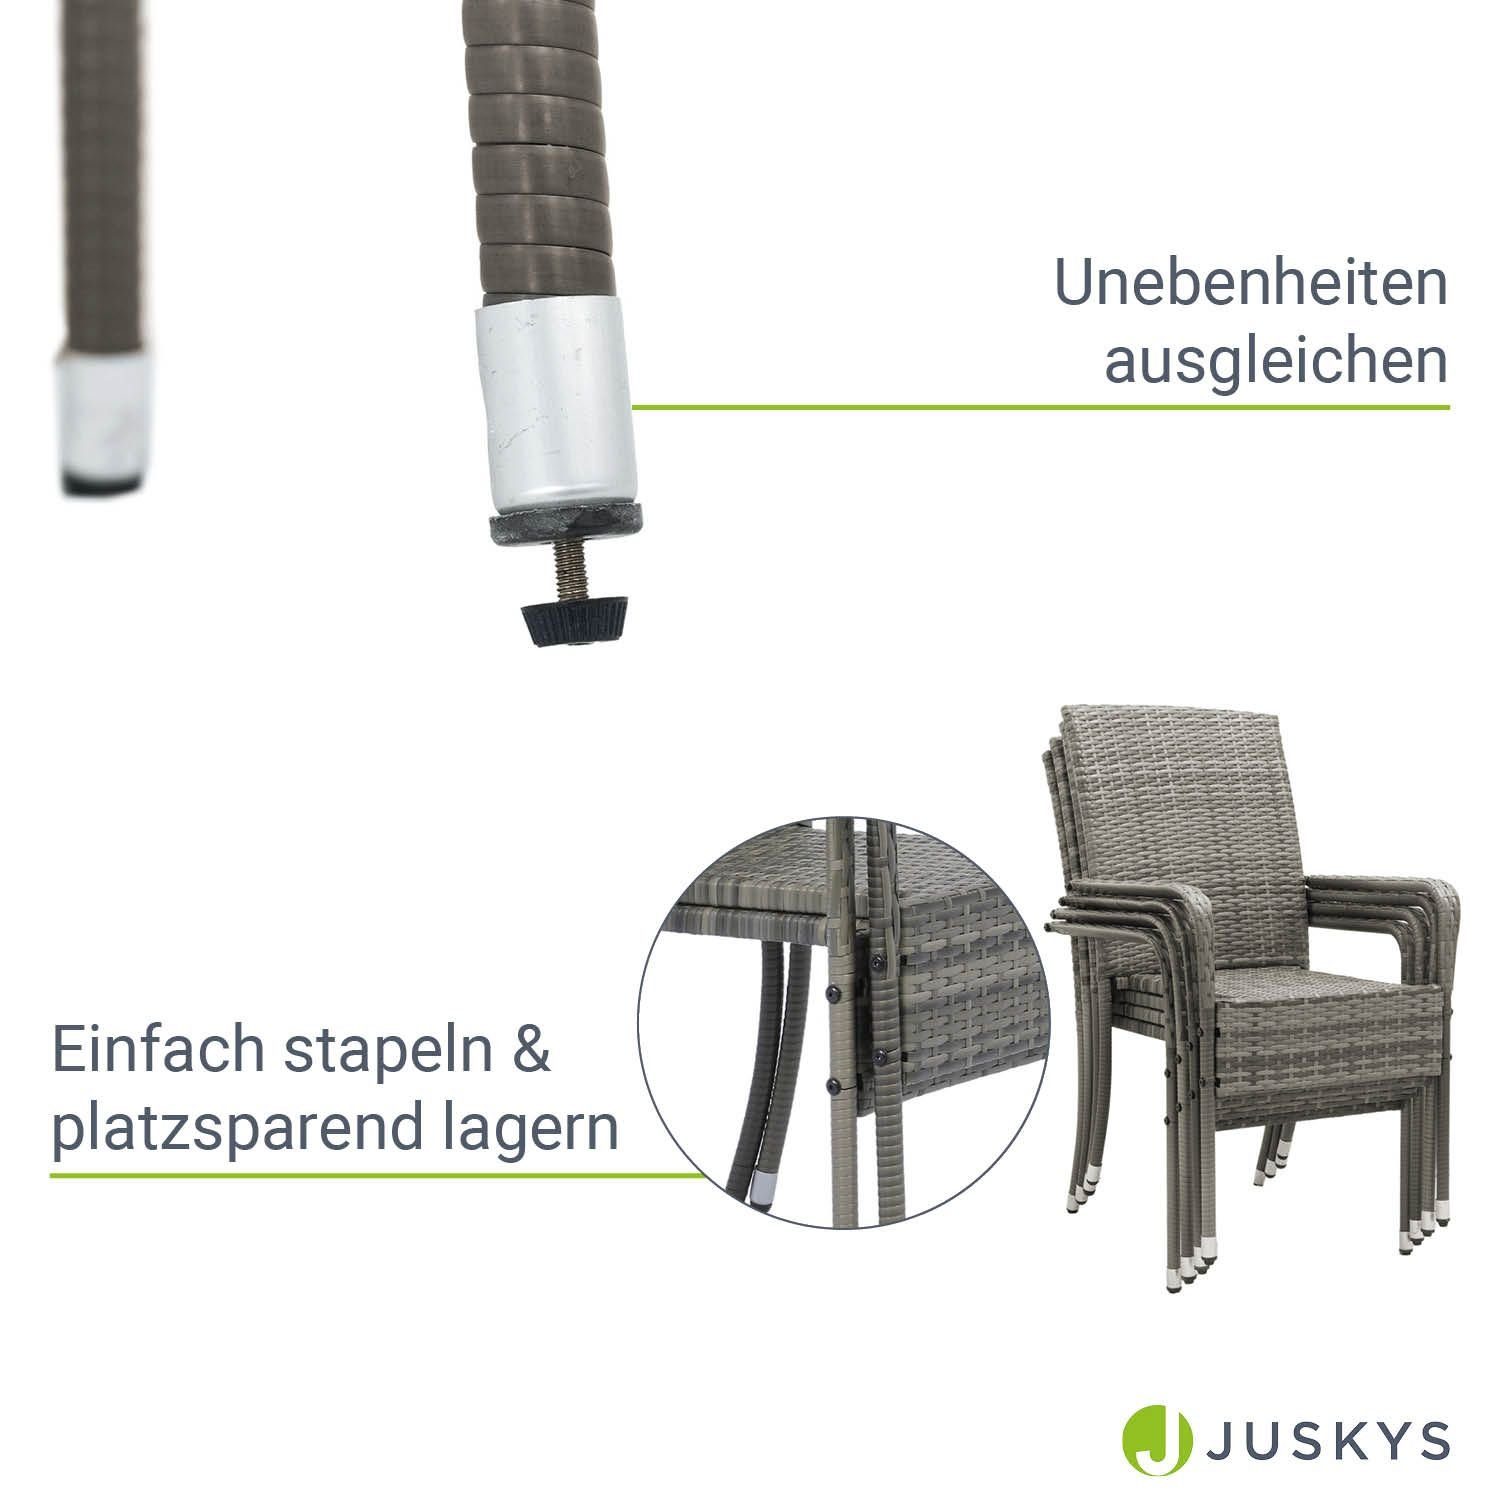 stapelbar, Juskys stabil und Yoro modern, (4 leicht St), Grau Gartenstuhl